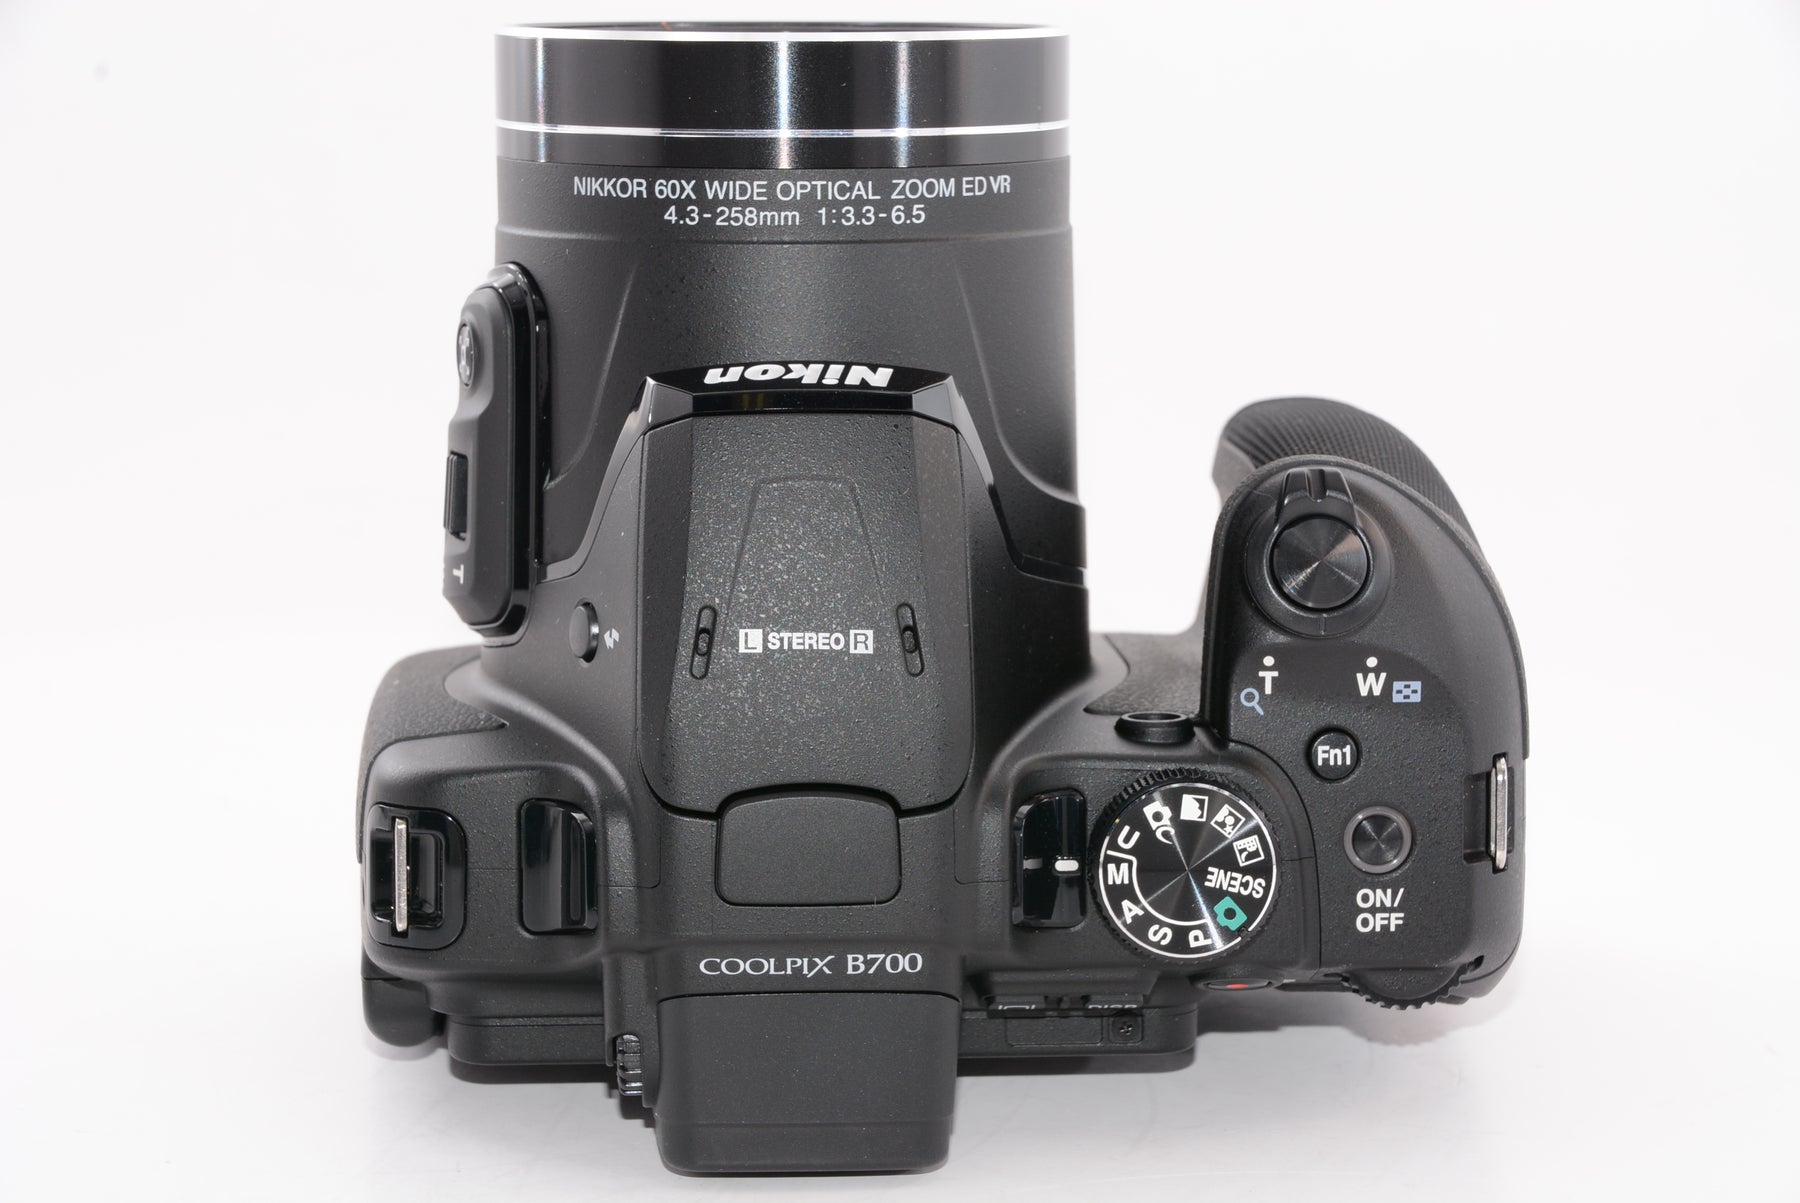 NikonデジタルカメラCOOLPIX B700 光学60倍ズーム2029万画素 ...